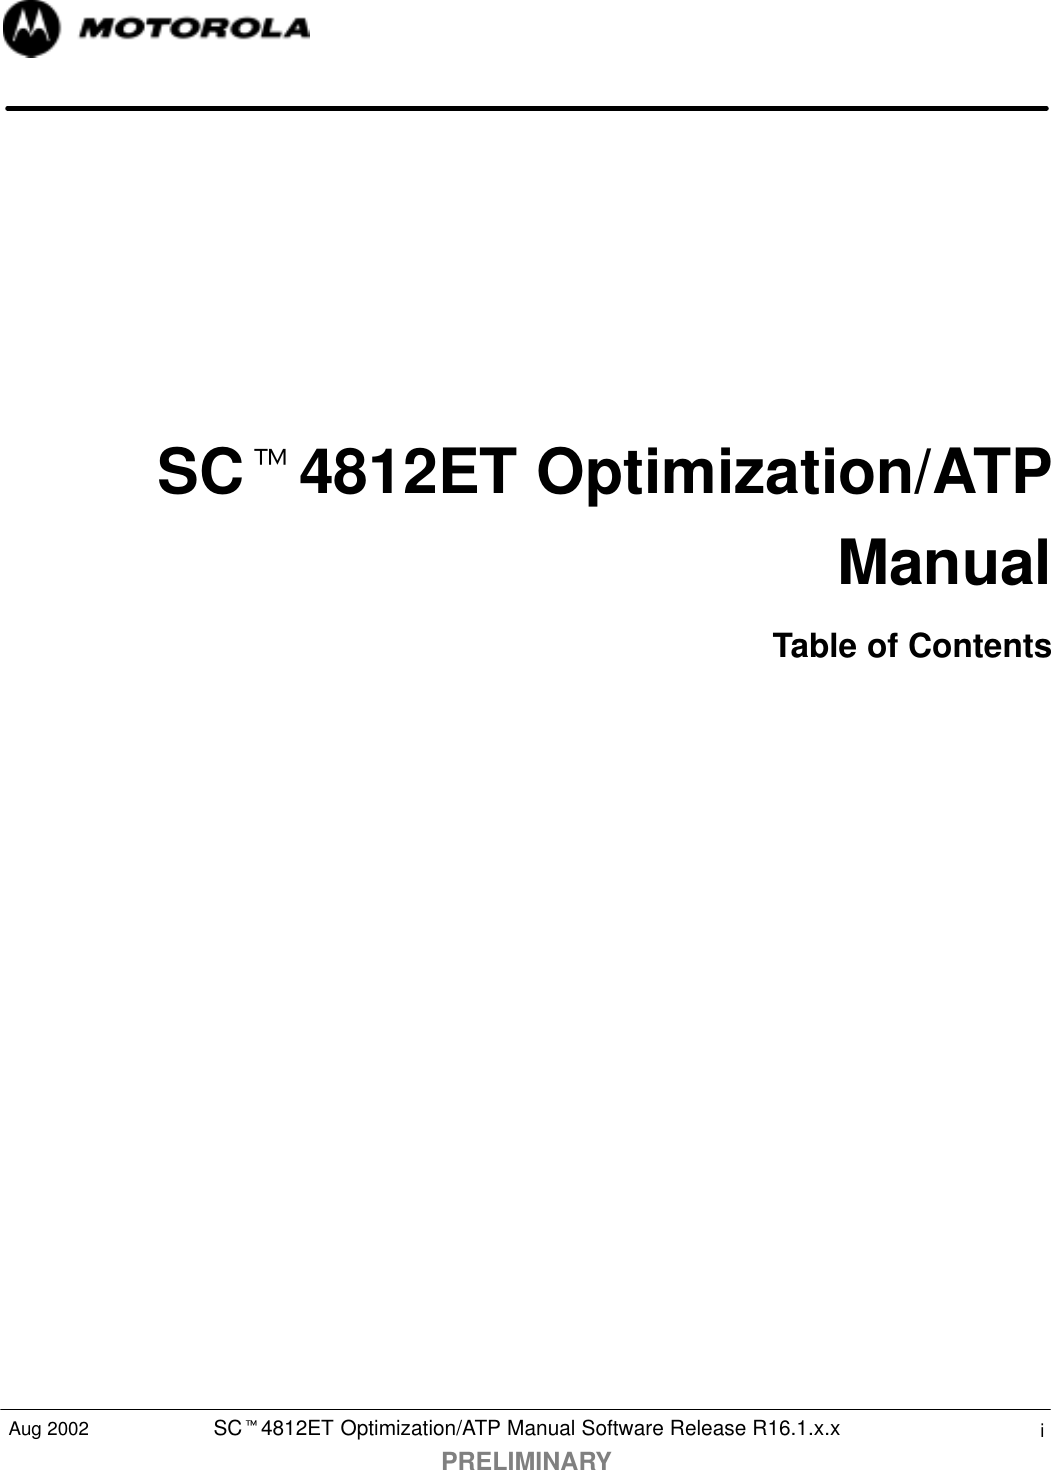 SCt4812ET Optimization/ATP Manual Software Release R16.1.x.xPRELIMINARYiAug 2002SCt4812ET Optimization/ATPManualTable of Contents...